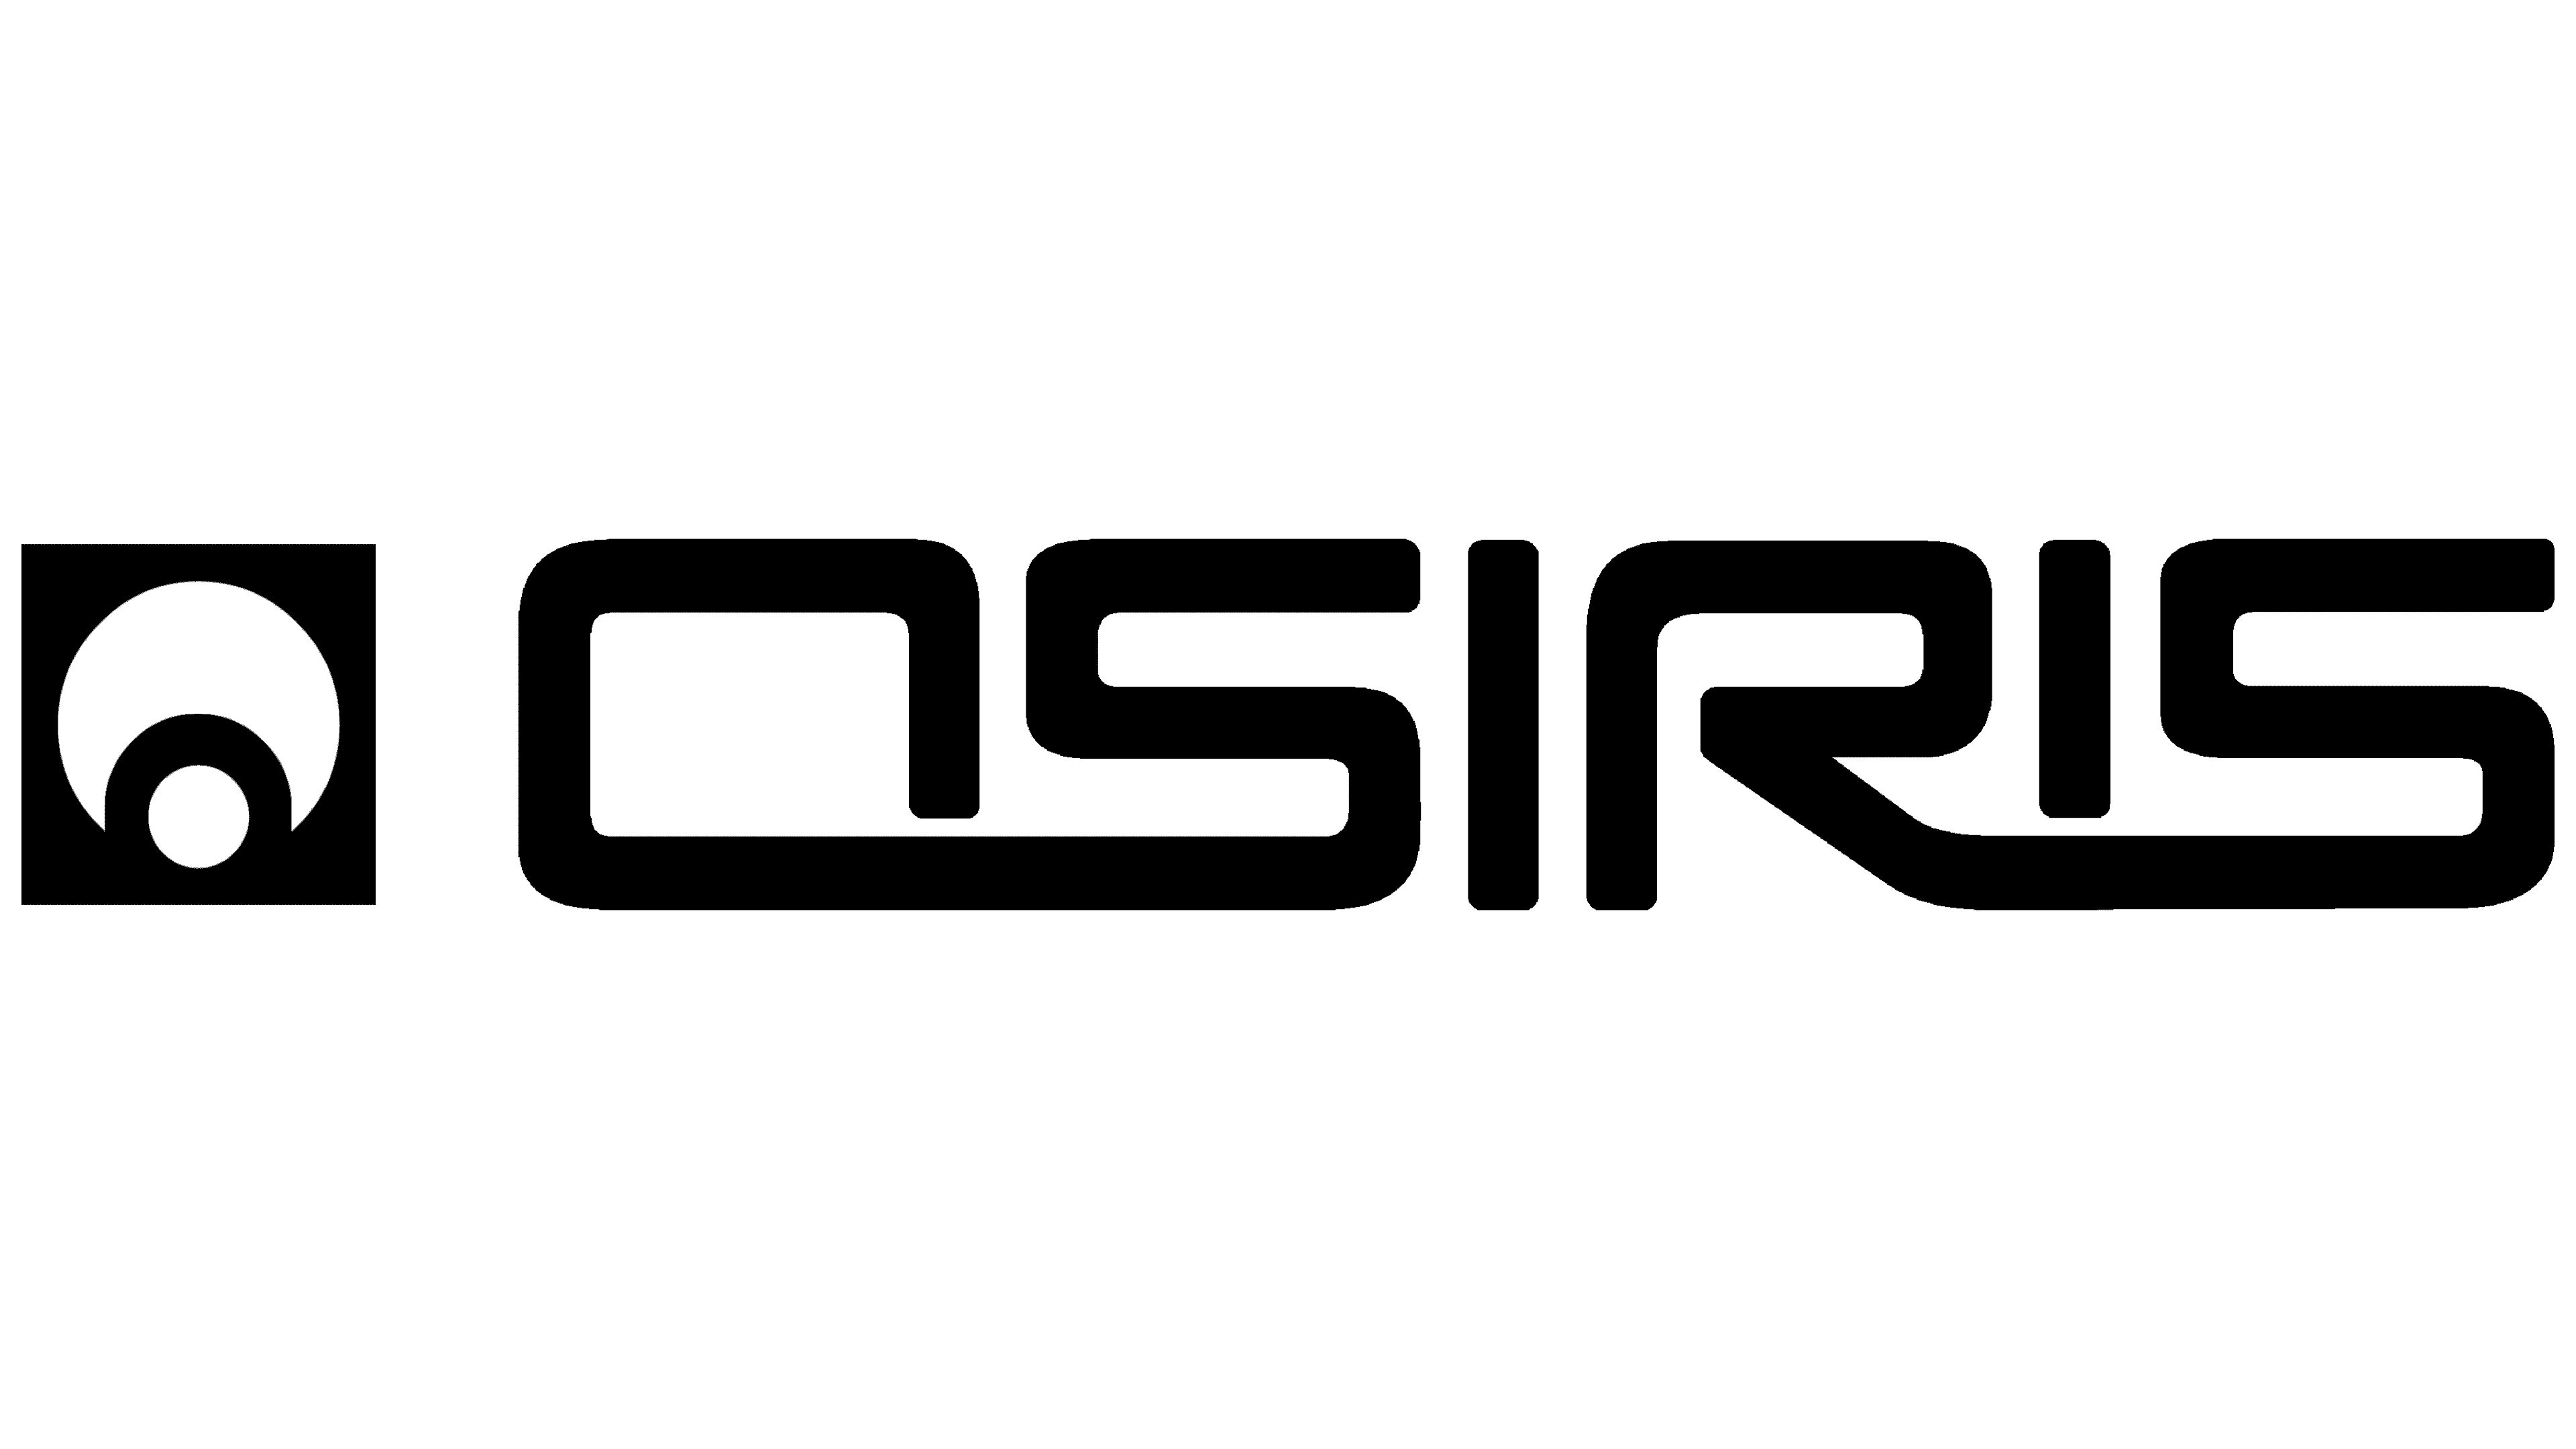 OSIRIS osirisshoes  Instagram photos and videos